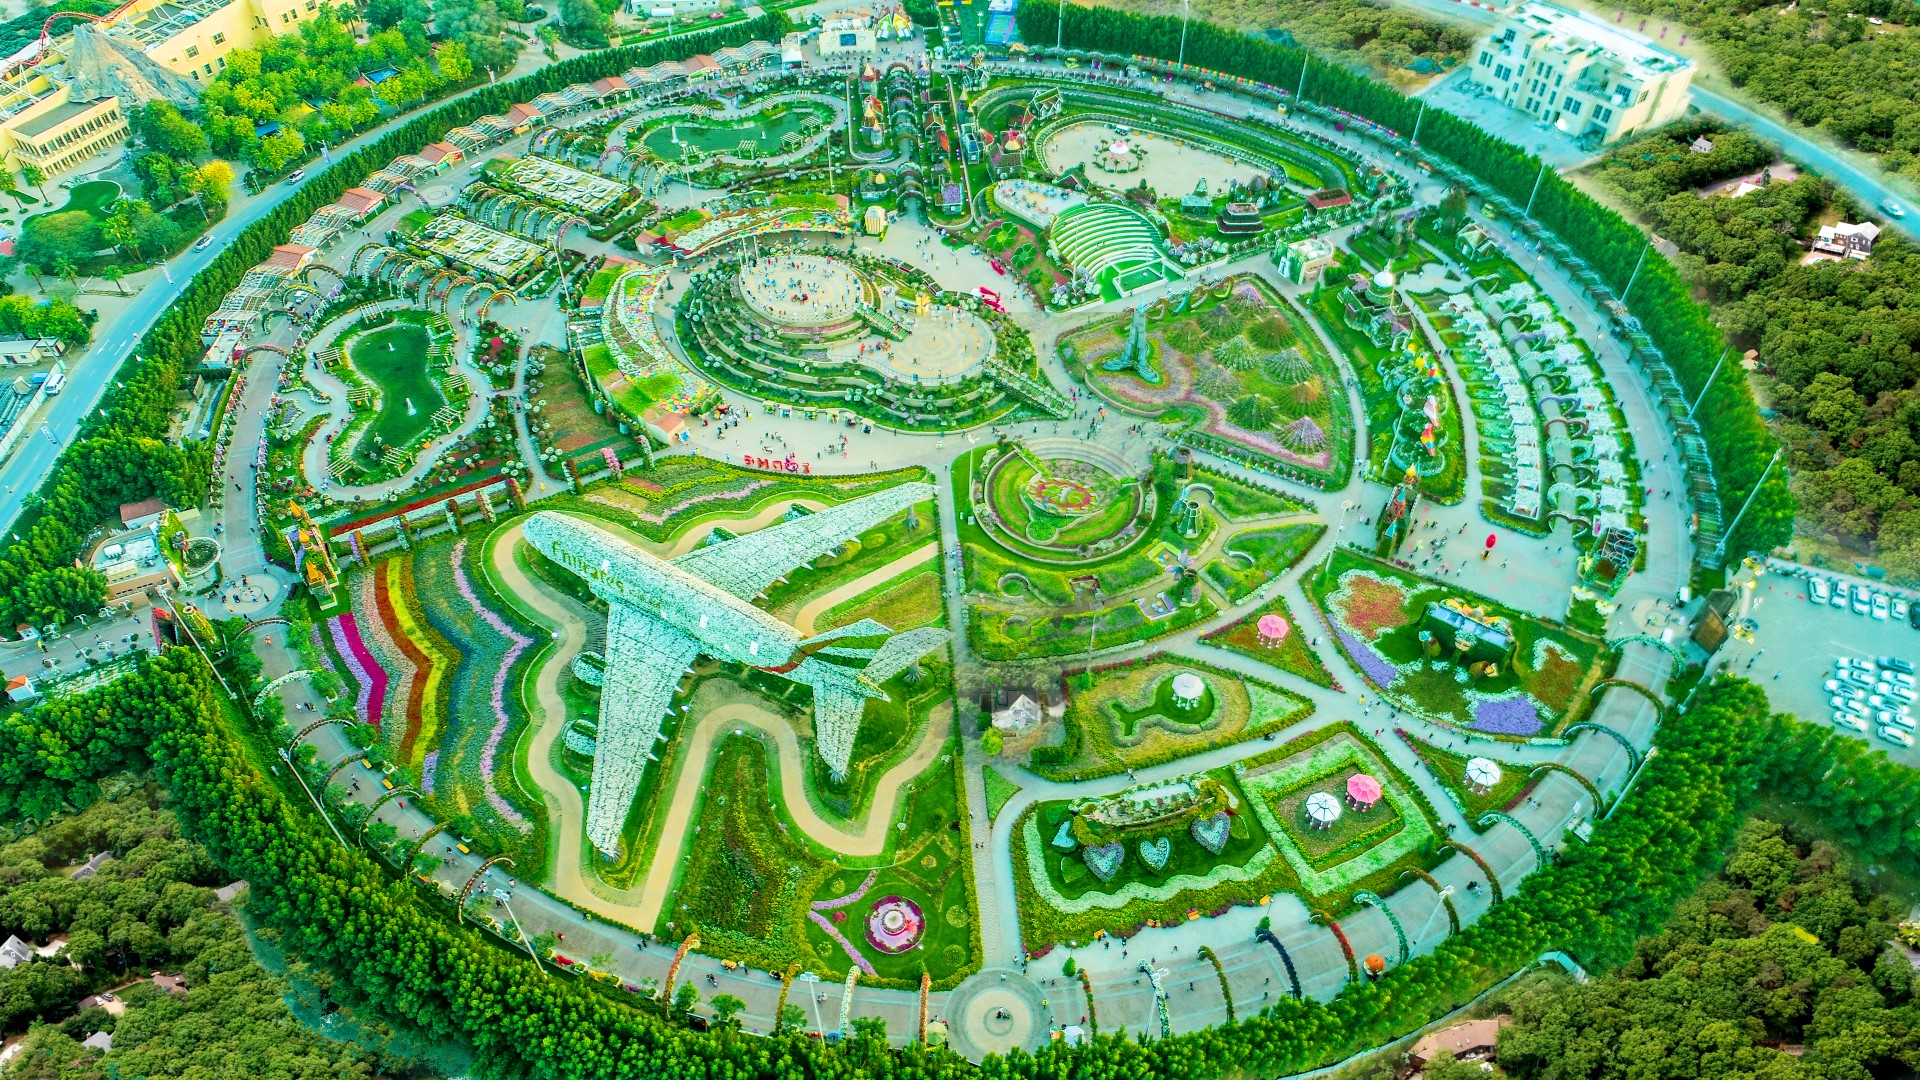 1581258341 998 A guide to the most beautiful Dubai theme parks - A guide to the most beautiful Dubai theme parks